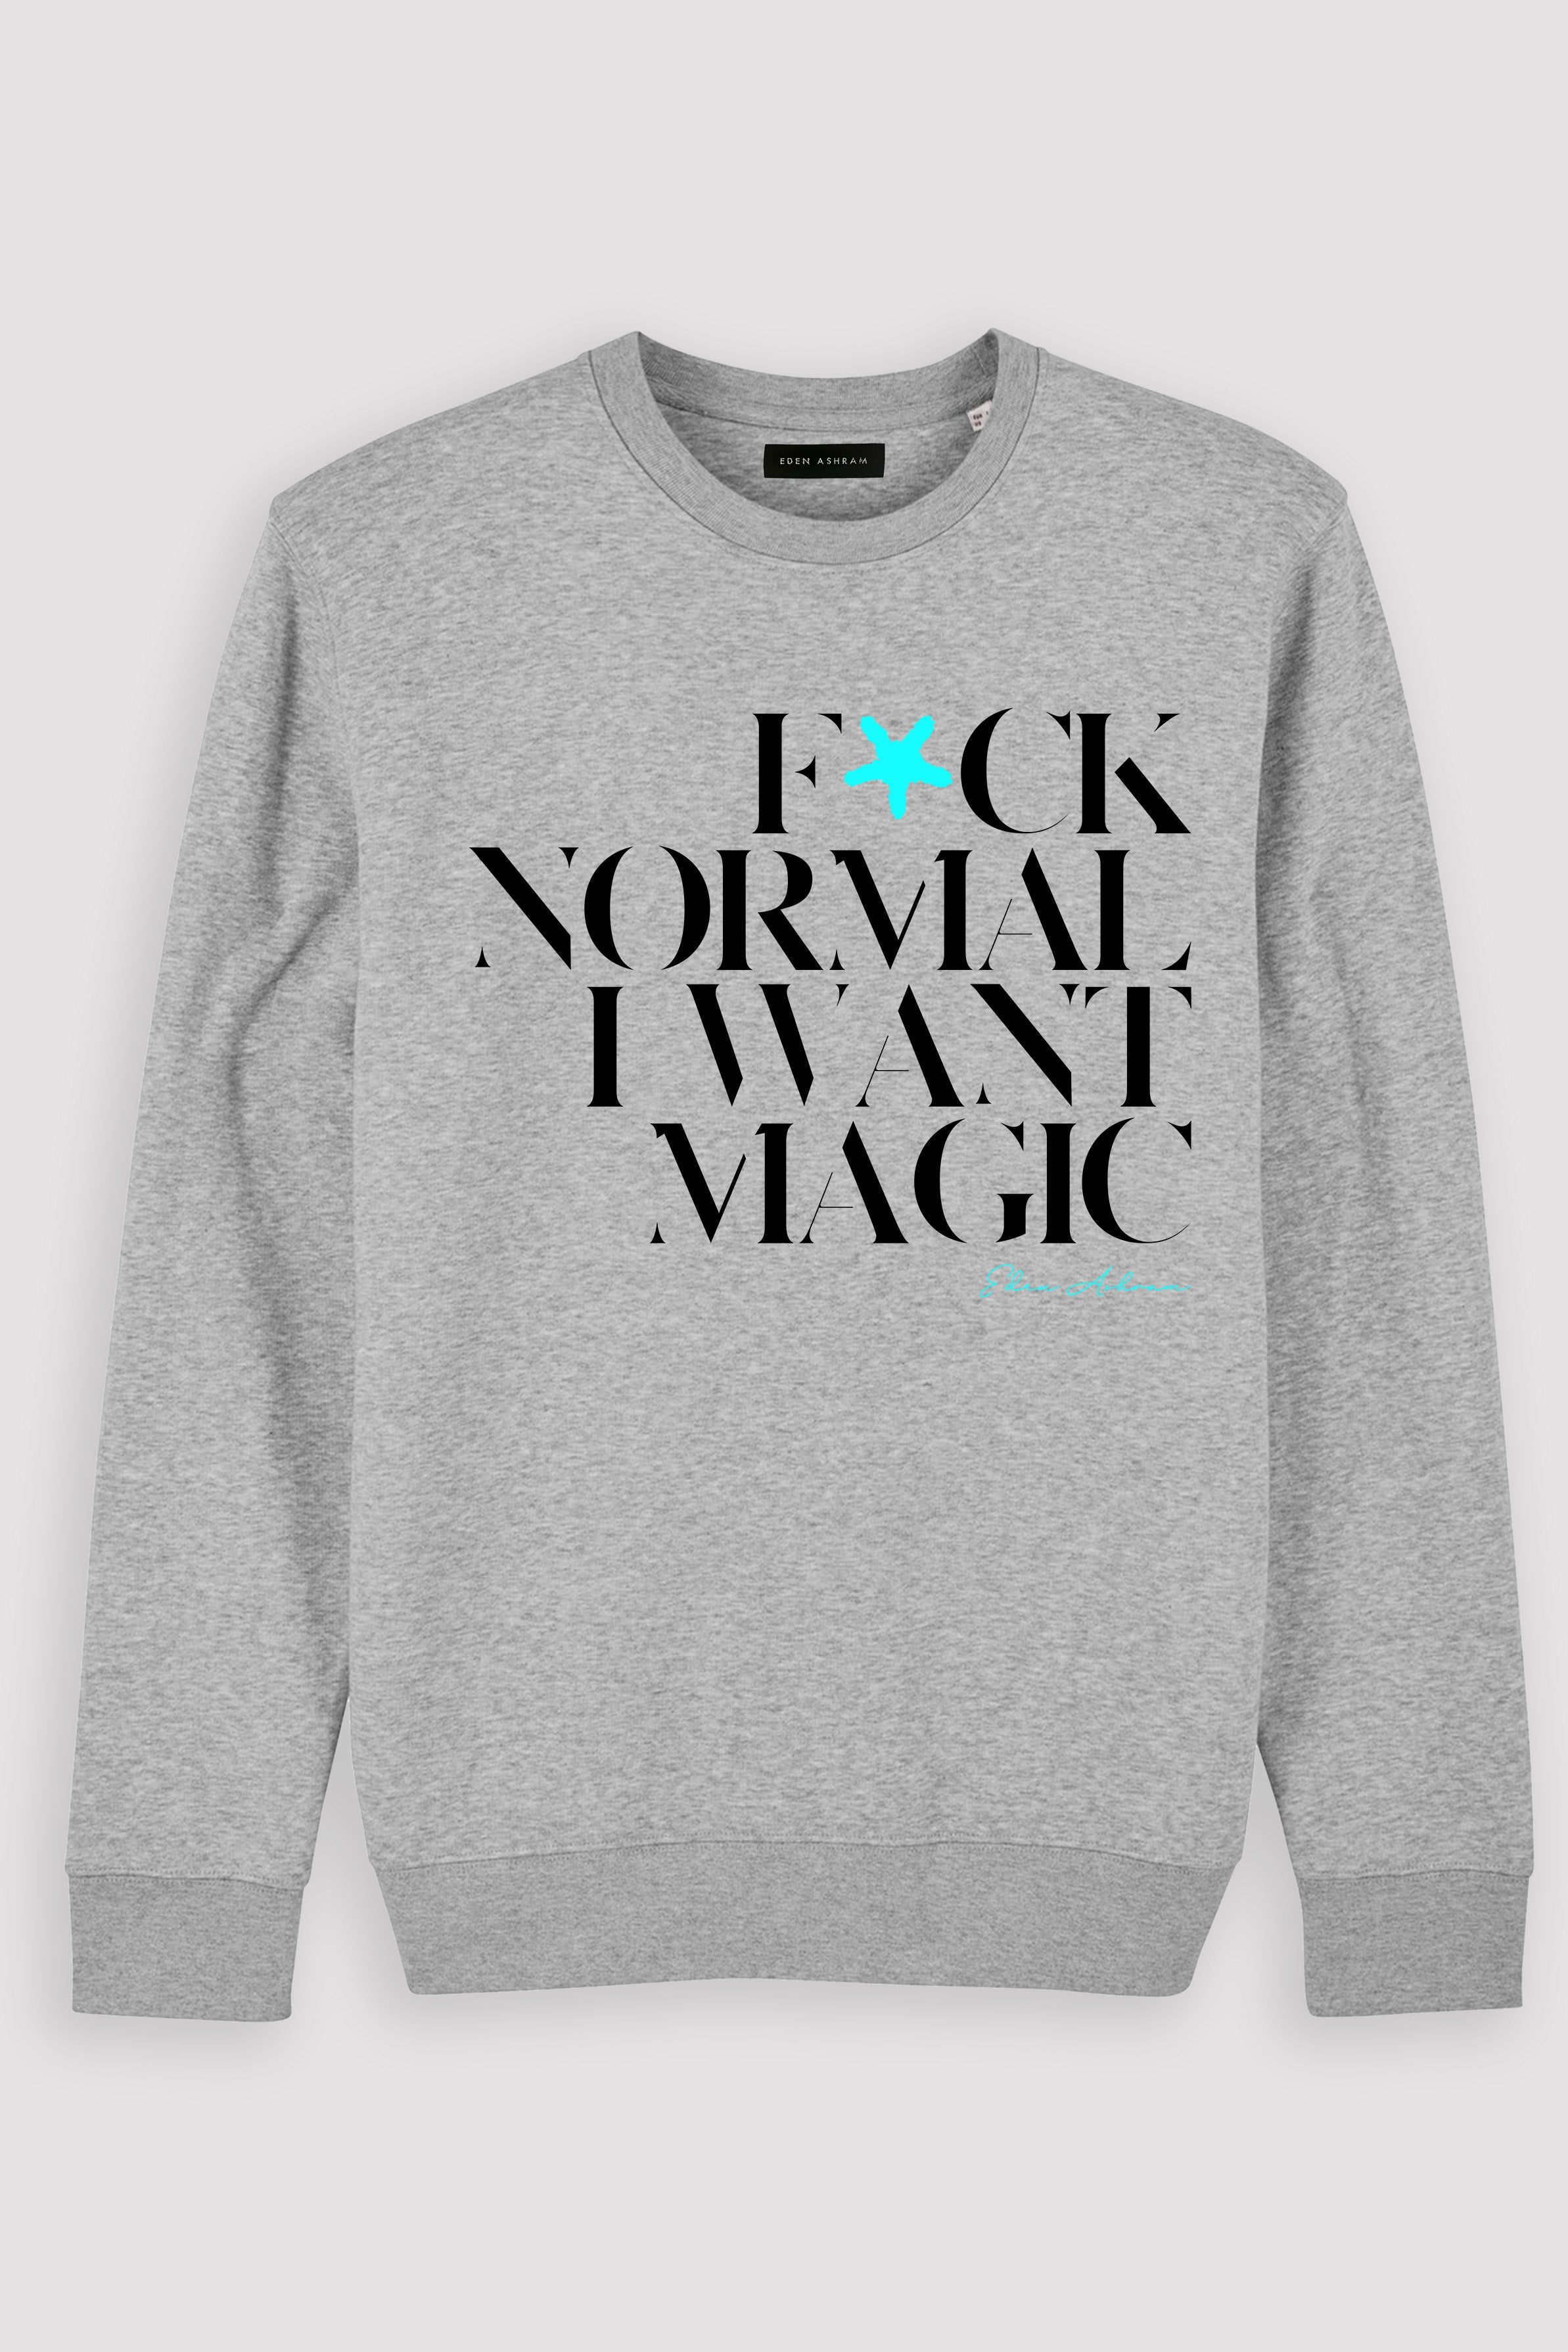 EDEN ASHRAM F*ck Normal I Want Magic Premium Crew Neck Sweatshirt Heather Grey